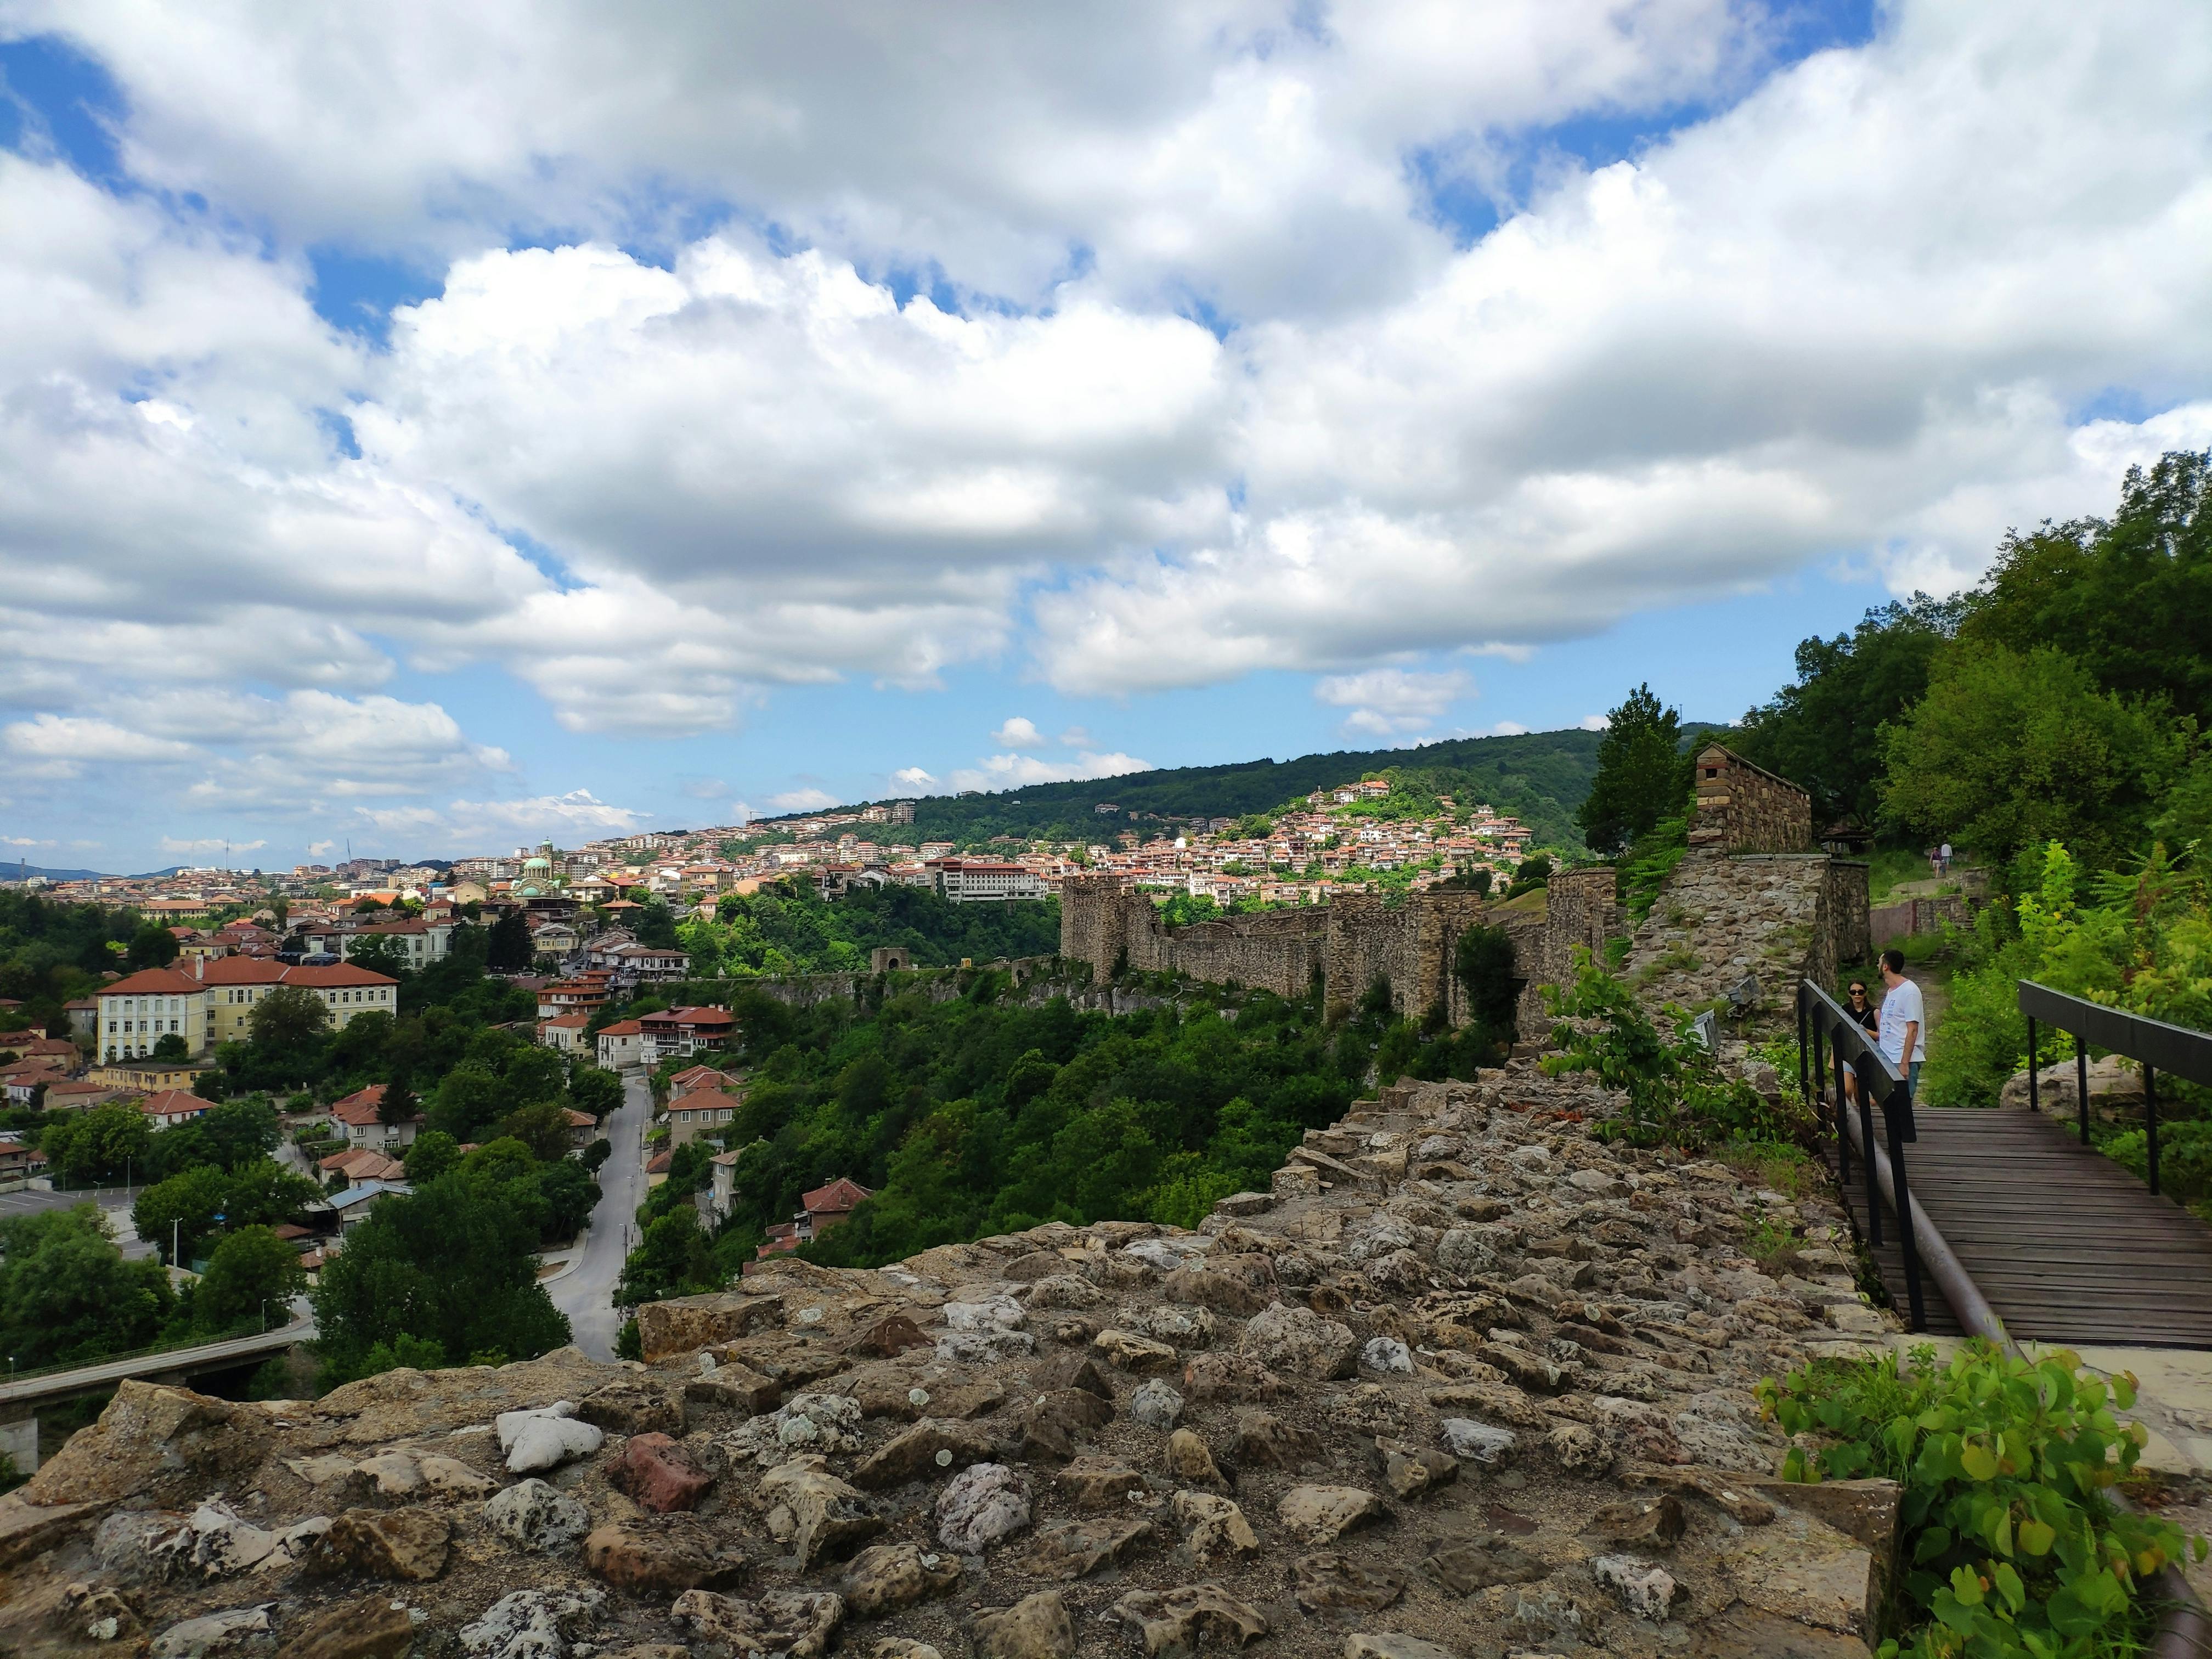 Visite autoguidée à Veliko Tarnovo et Arbanassi depuis Sofia